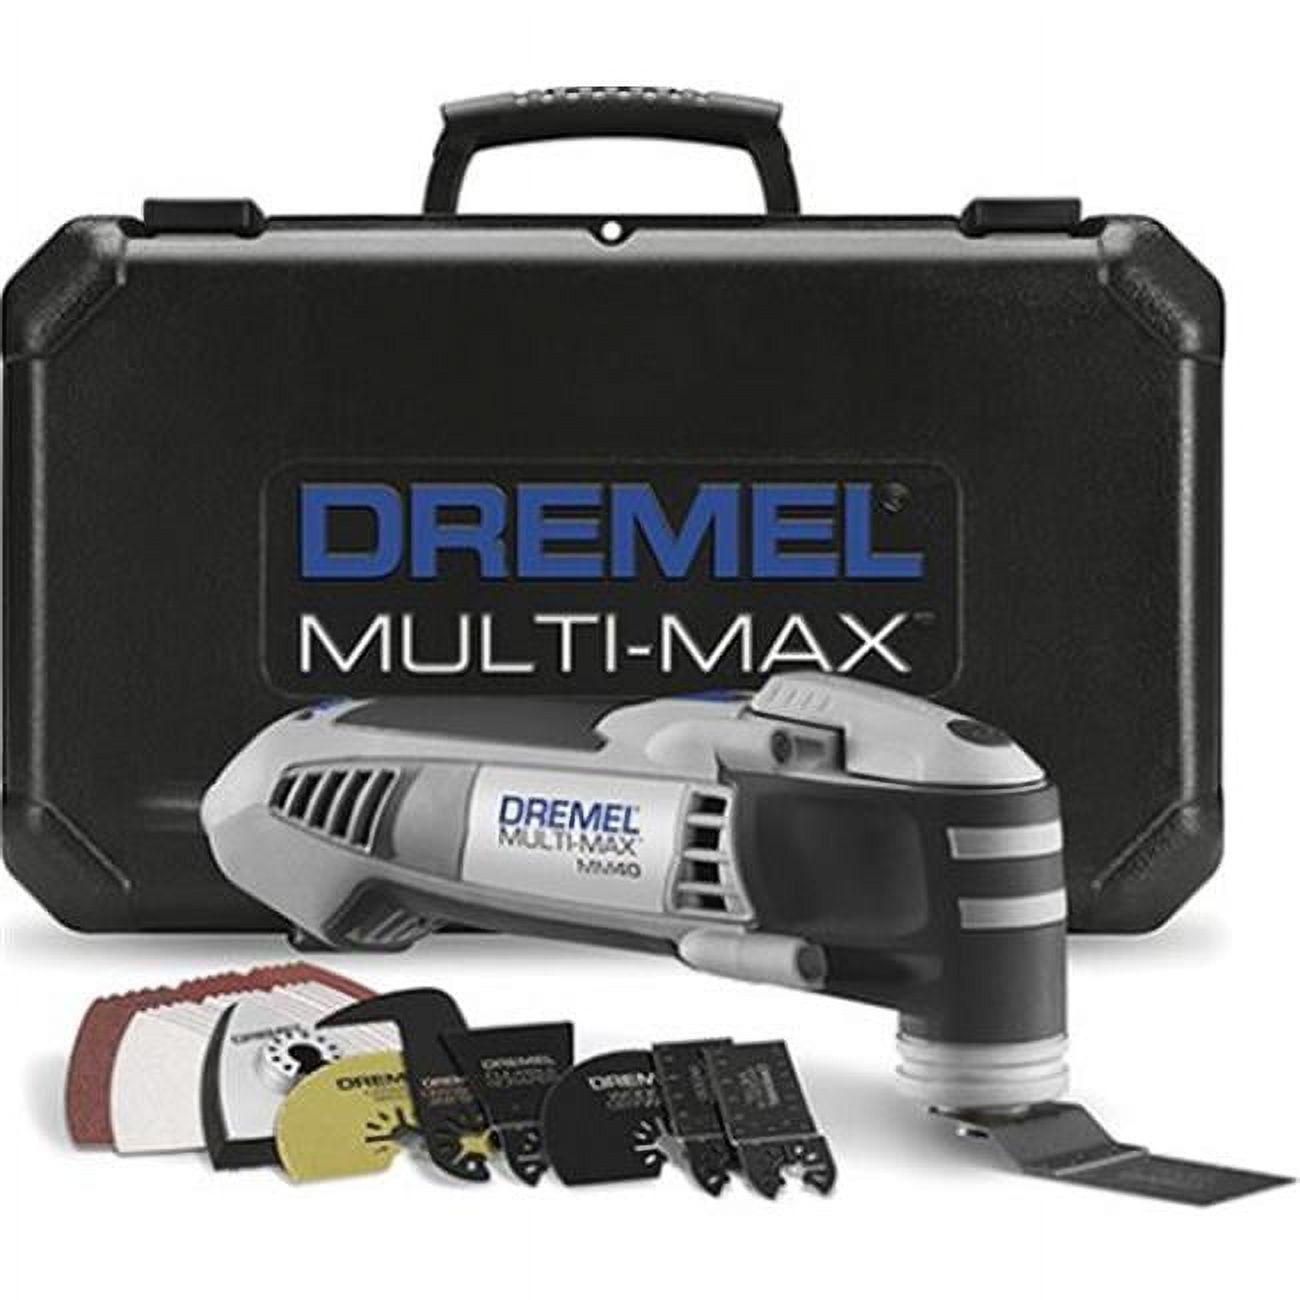 Dremel 566 Tile Cutting Kit Tool Part for Various Dremel Models - 2 Pack